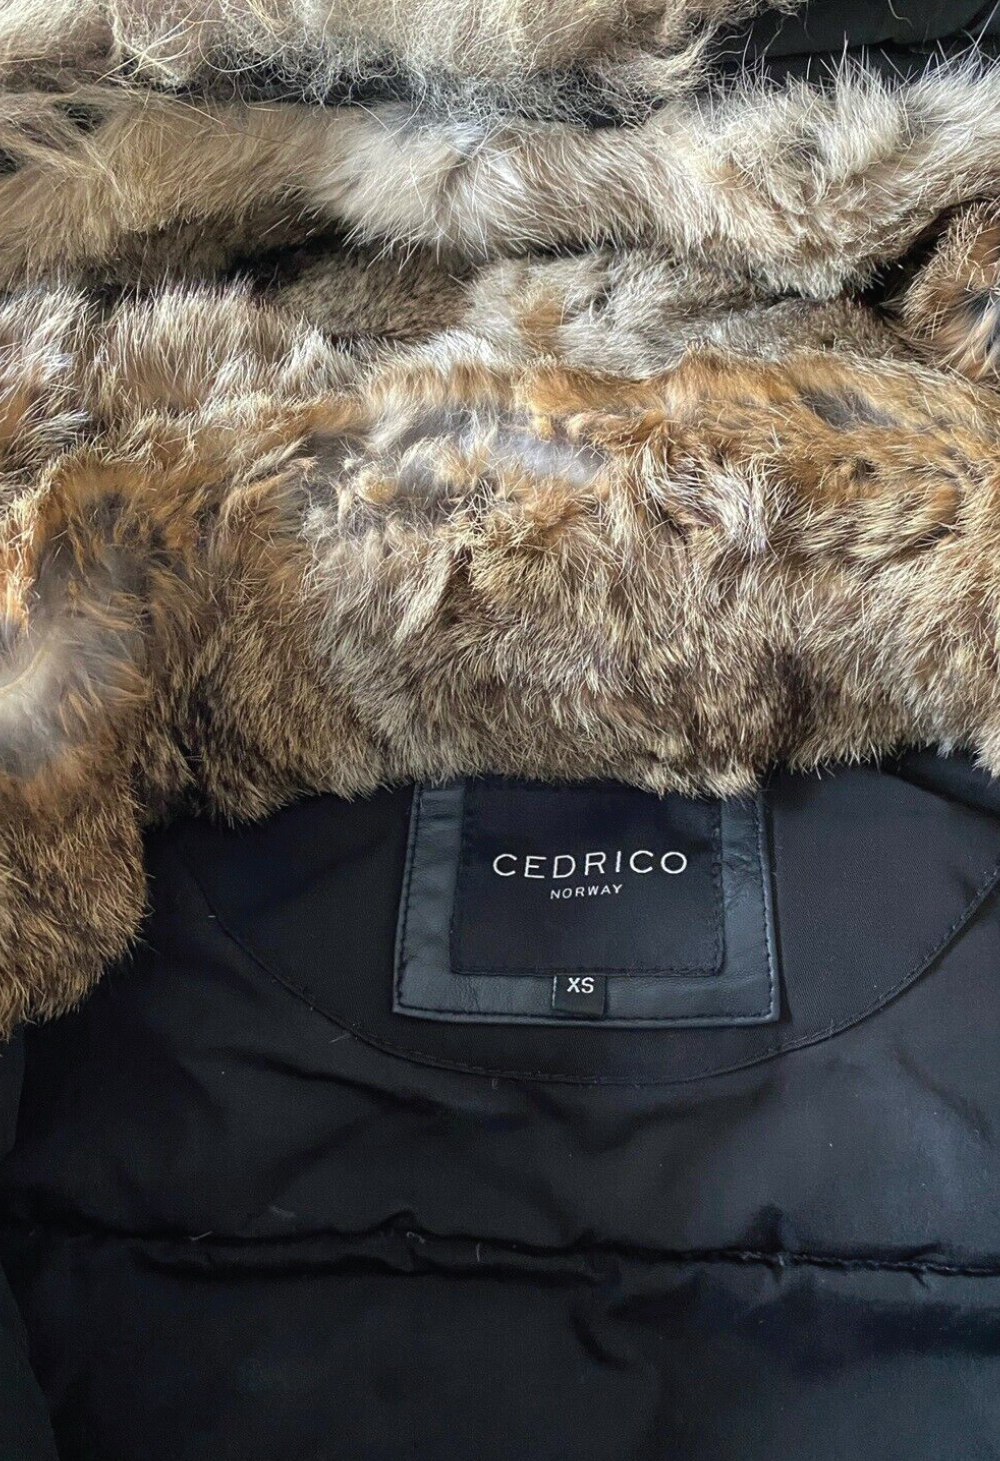 Cedrico – Nordic Brand Agency Copenhagen